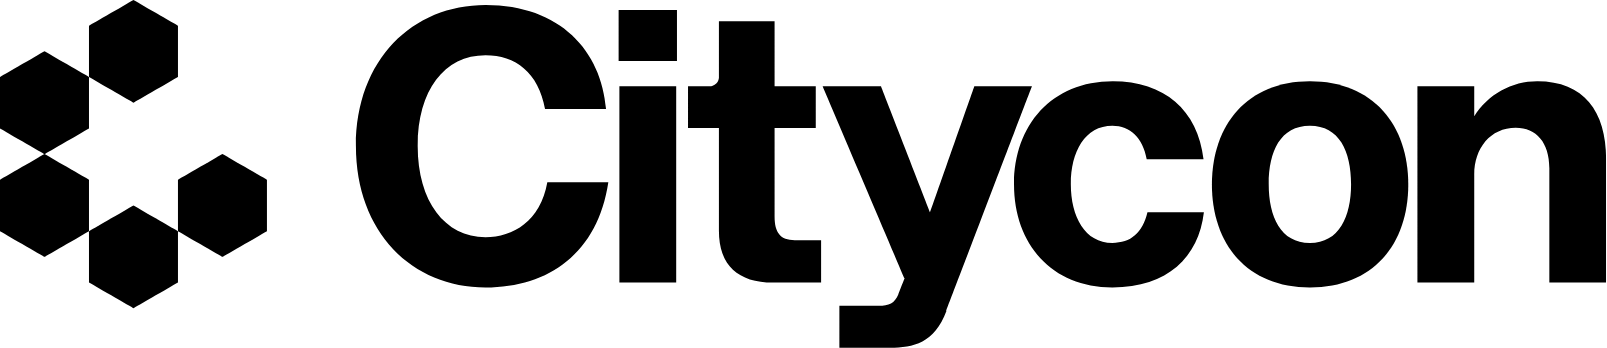 Citycon logo large (transparent PNG)